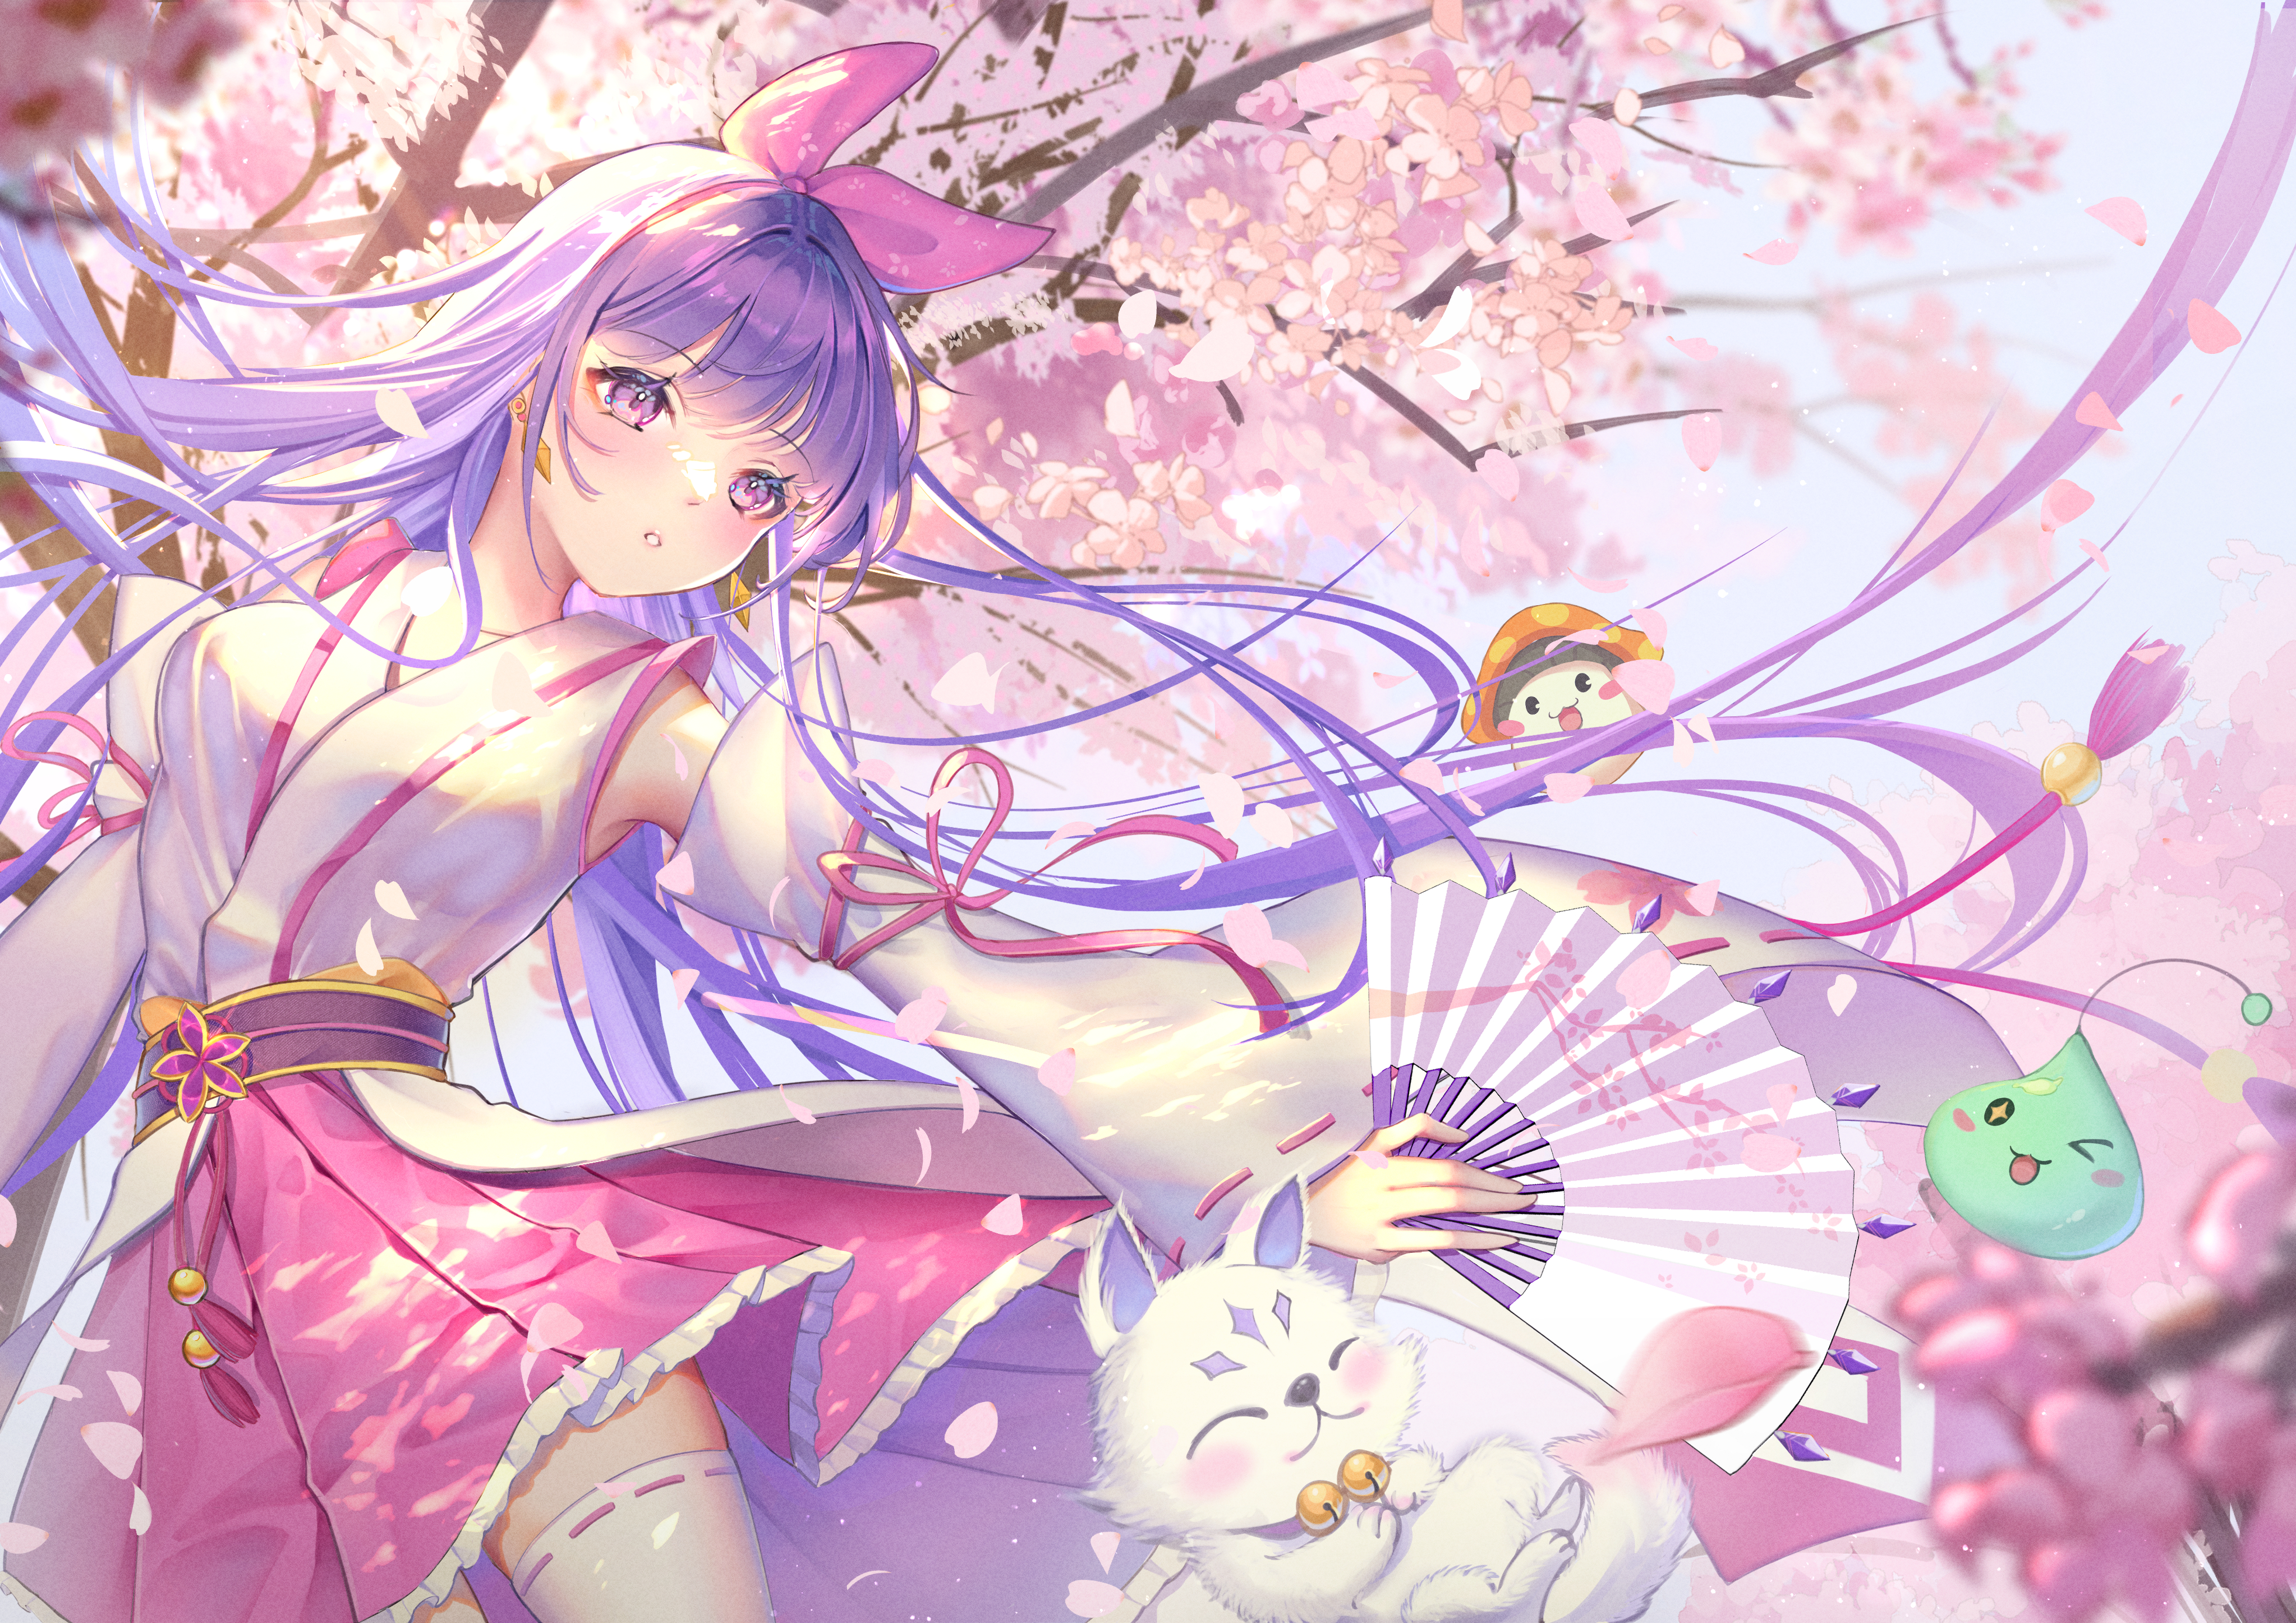 Anime 4093x2894 anime anime girls purple hair purple eyes long hair skirt stockings fans petals looking away blushing flowers branch cats animals sunlight earring